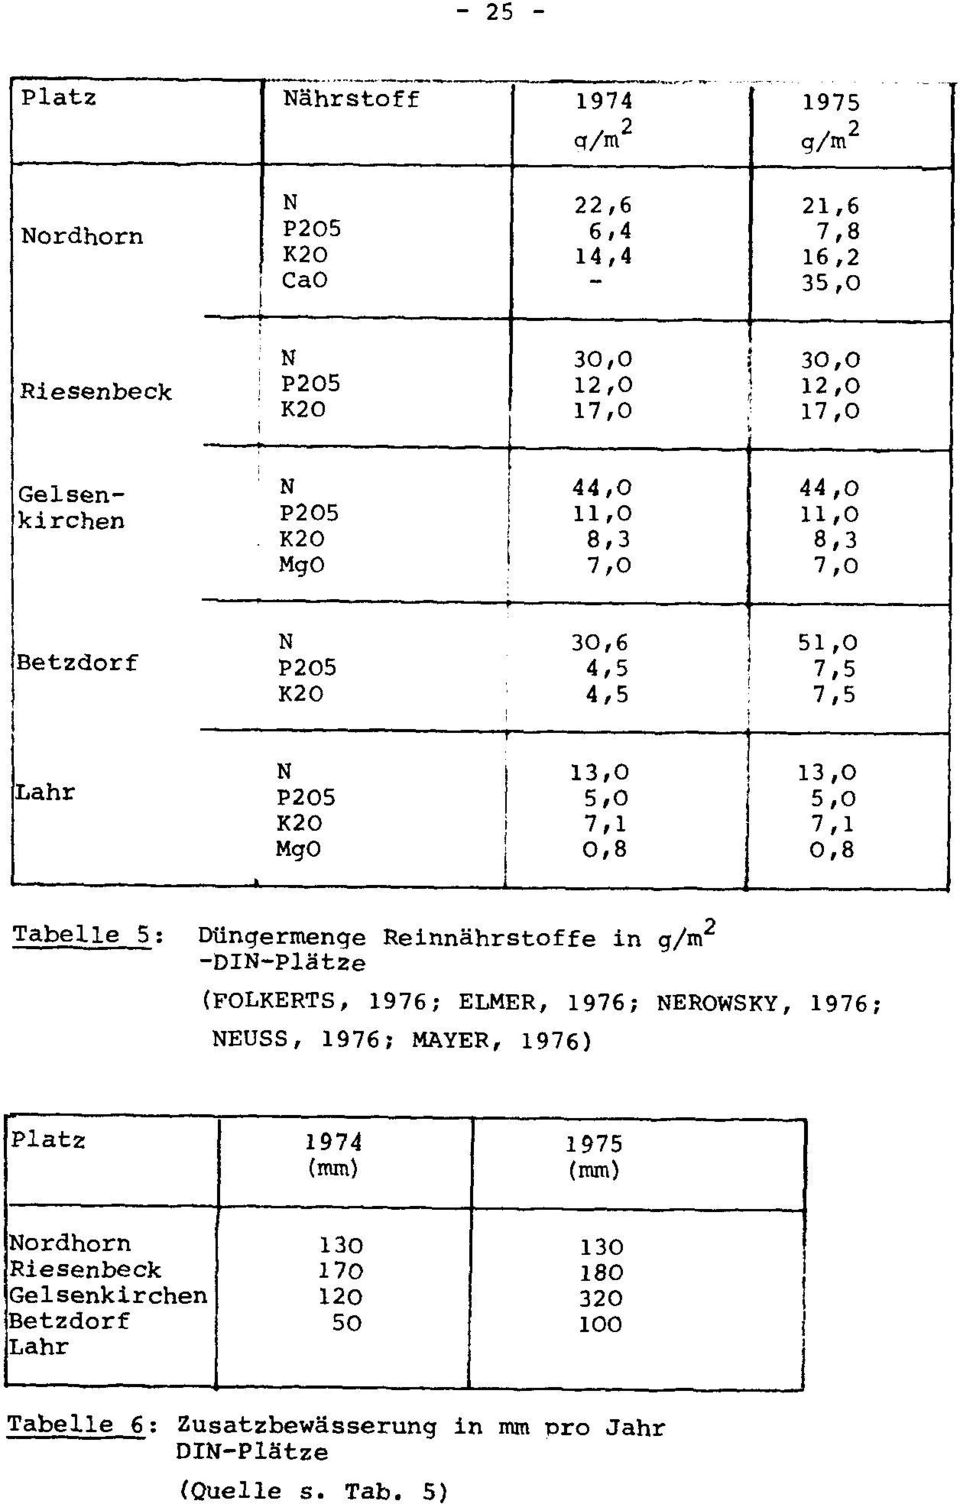 MgO 0,8 0,8 Tabelle 5: Dlingermenge Reinnahrstoffe in g/m 2 -DIN-Platze ; (FOLKERTS, 1976; ELMER, 1976; NEROWSKY, 1976; NEUSS, 1976; MAYER, 1976)!